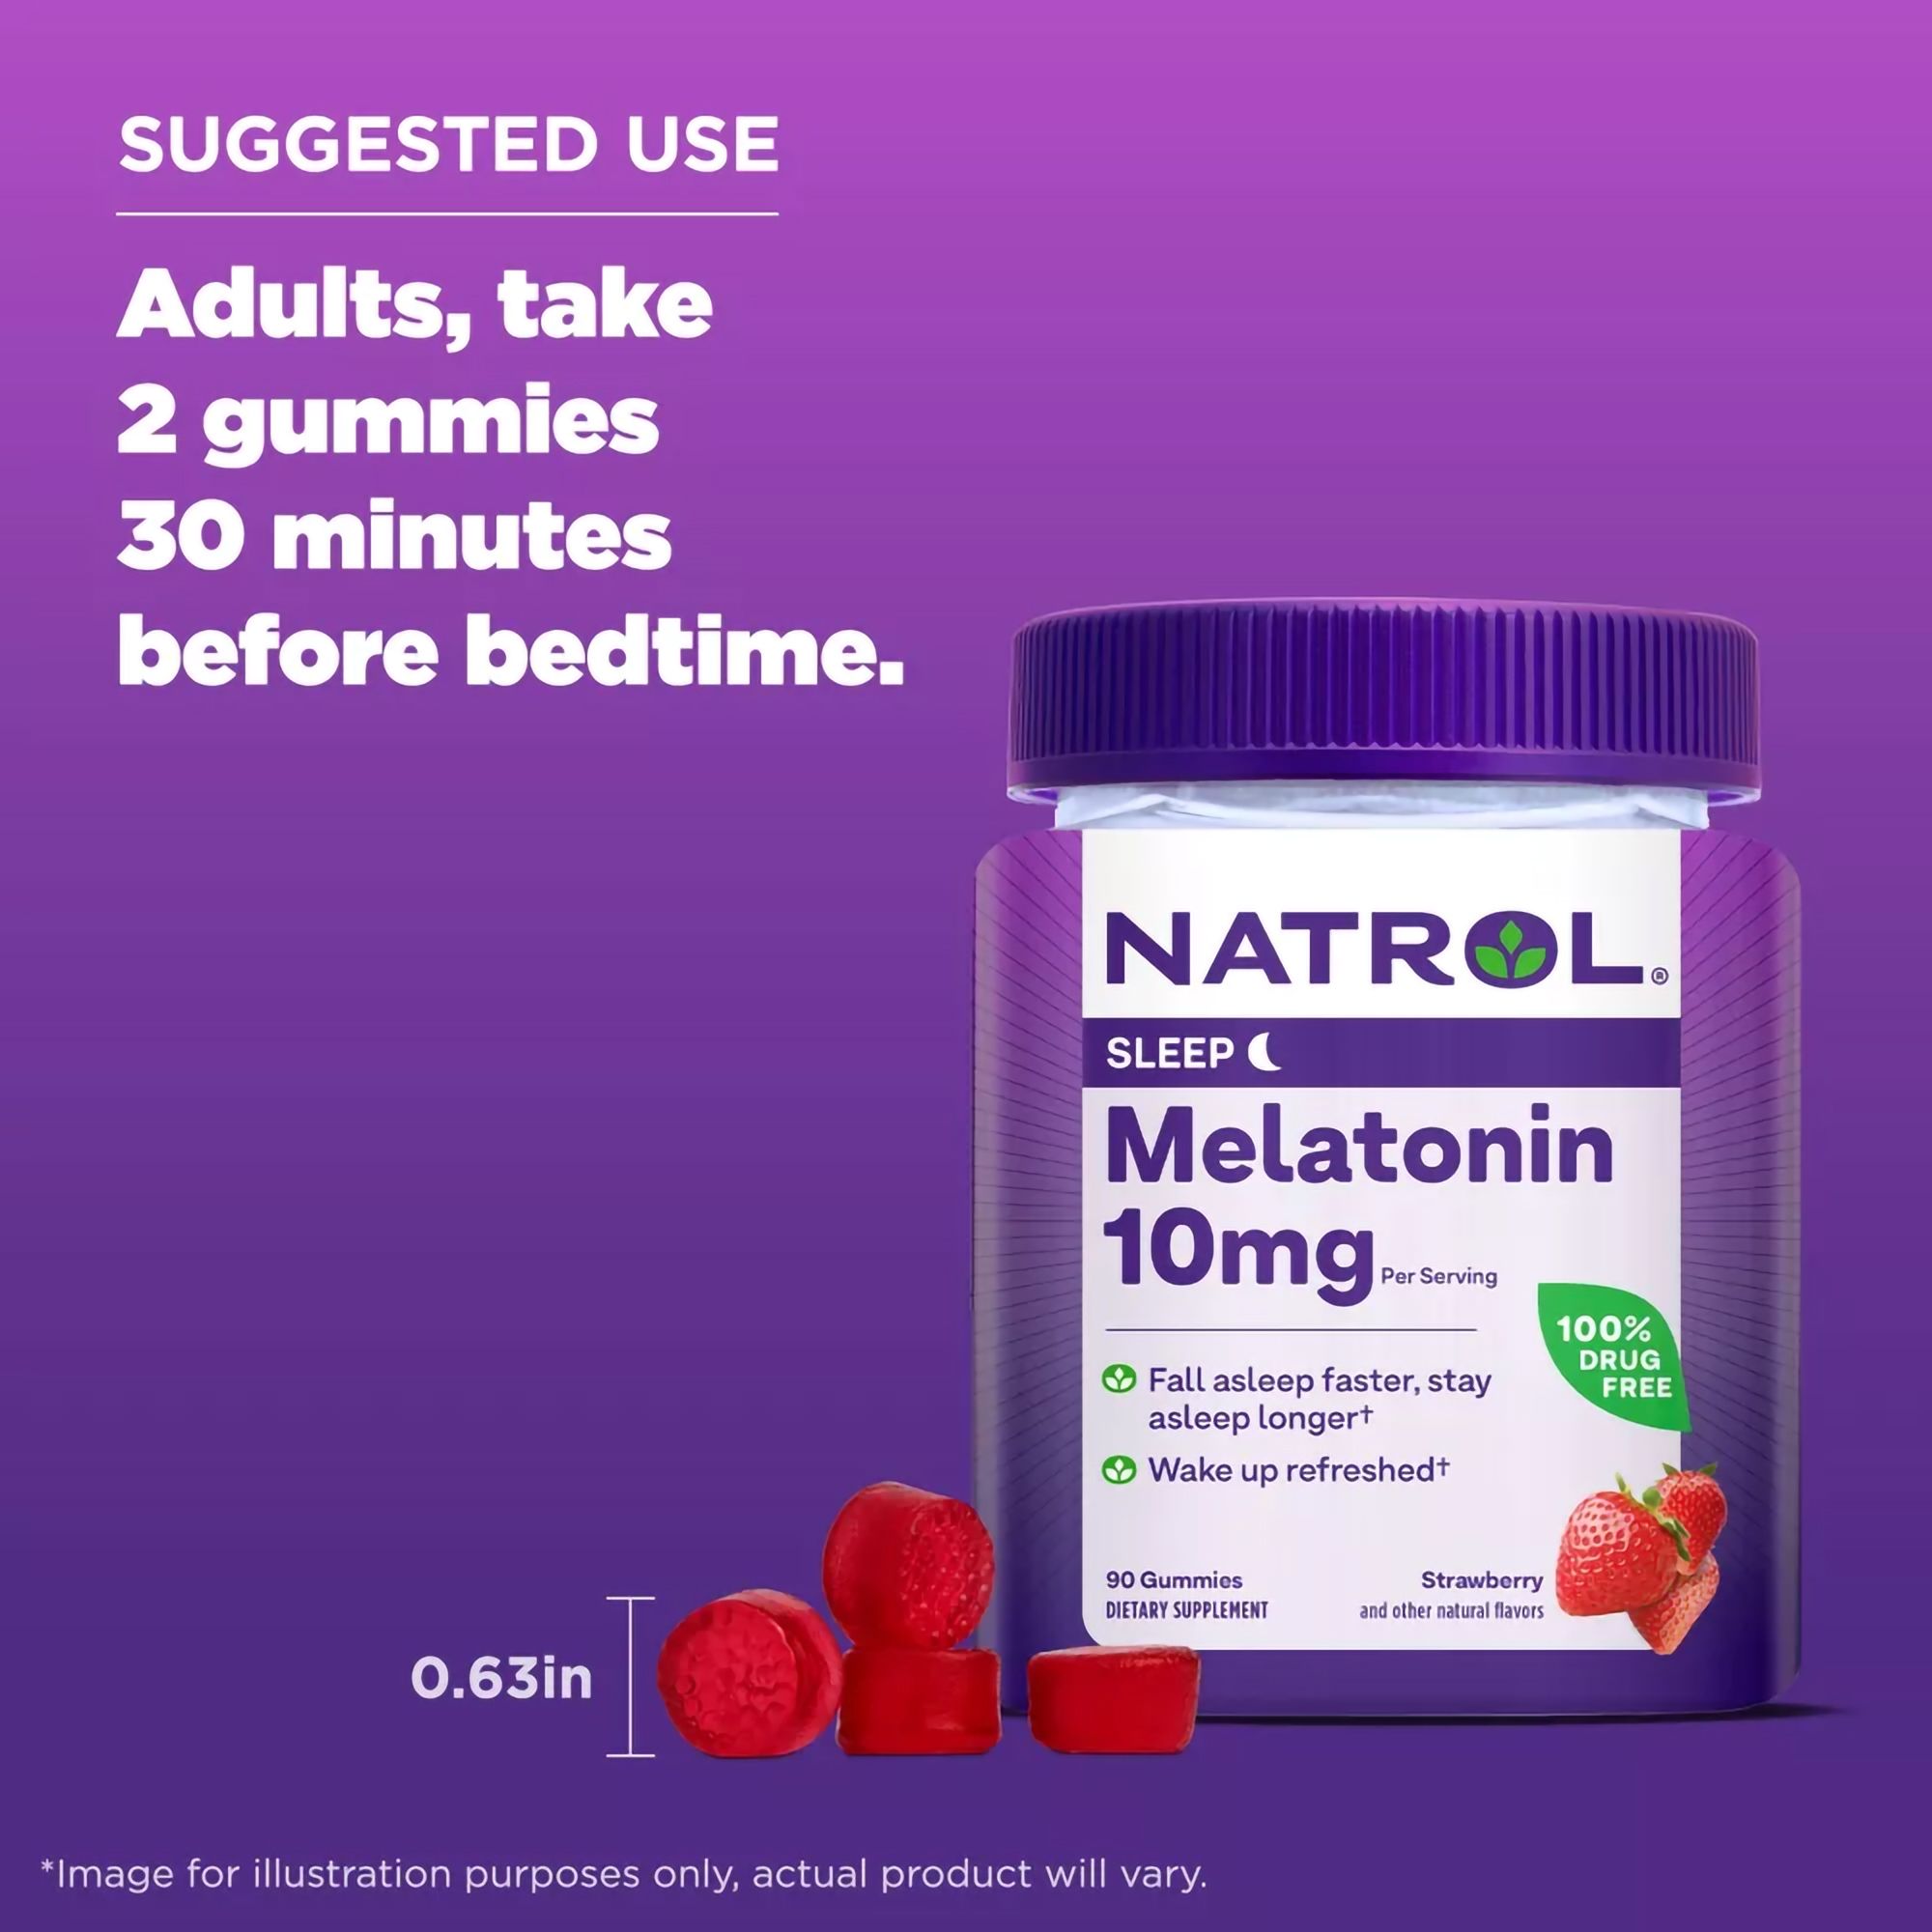 Natrol® Melatonin Sleep Aid Gummies, Strawberry, 10 mg - 90 ct